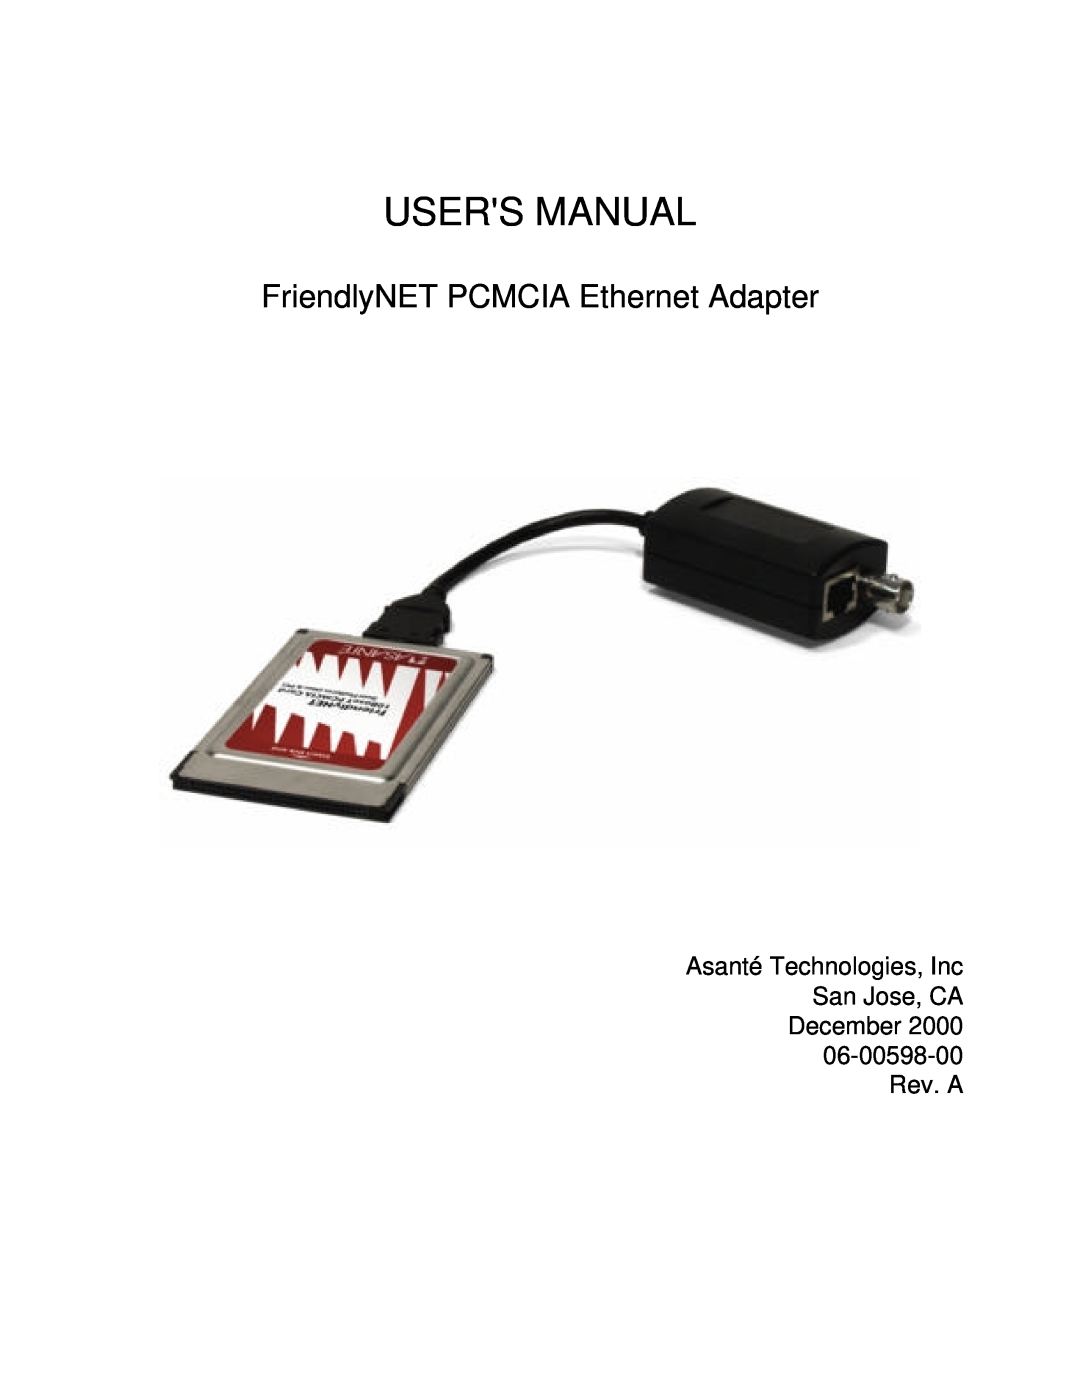 Asante Technologies user manual FriendlyNET PCMCIA Ethernet Adapter 